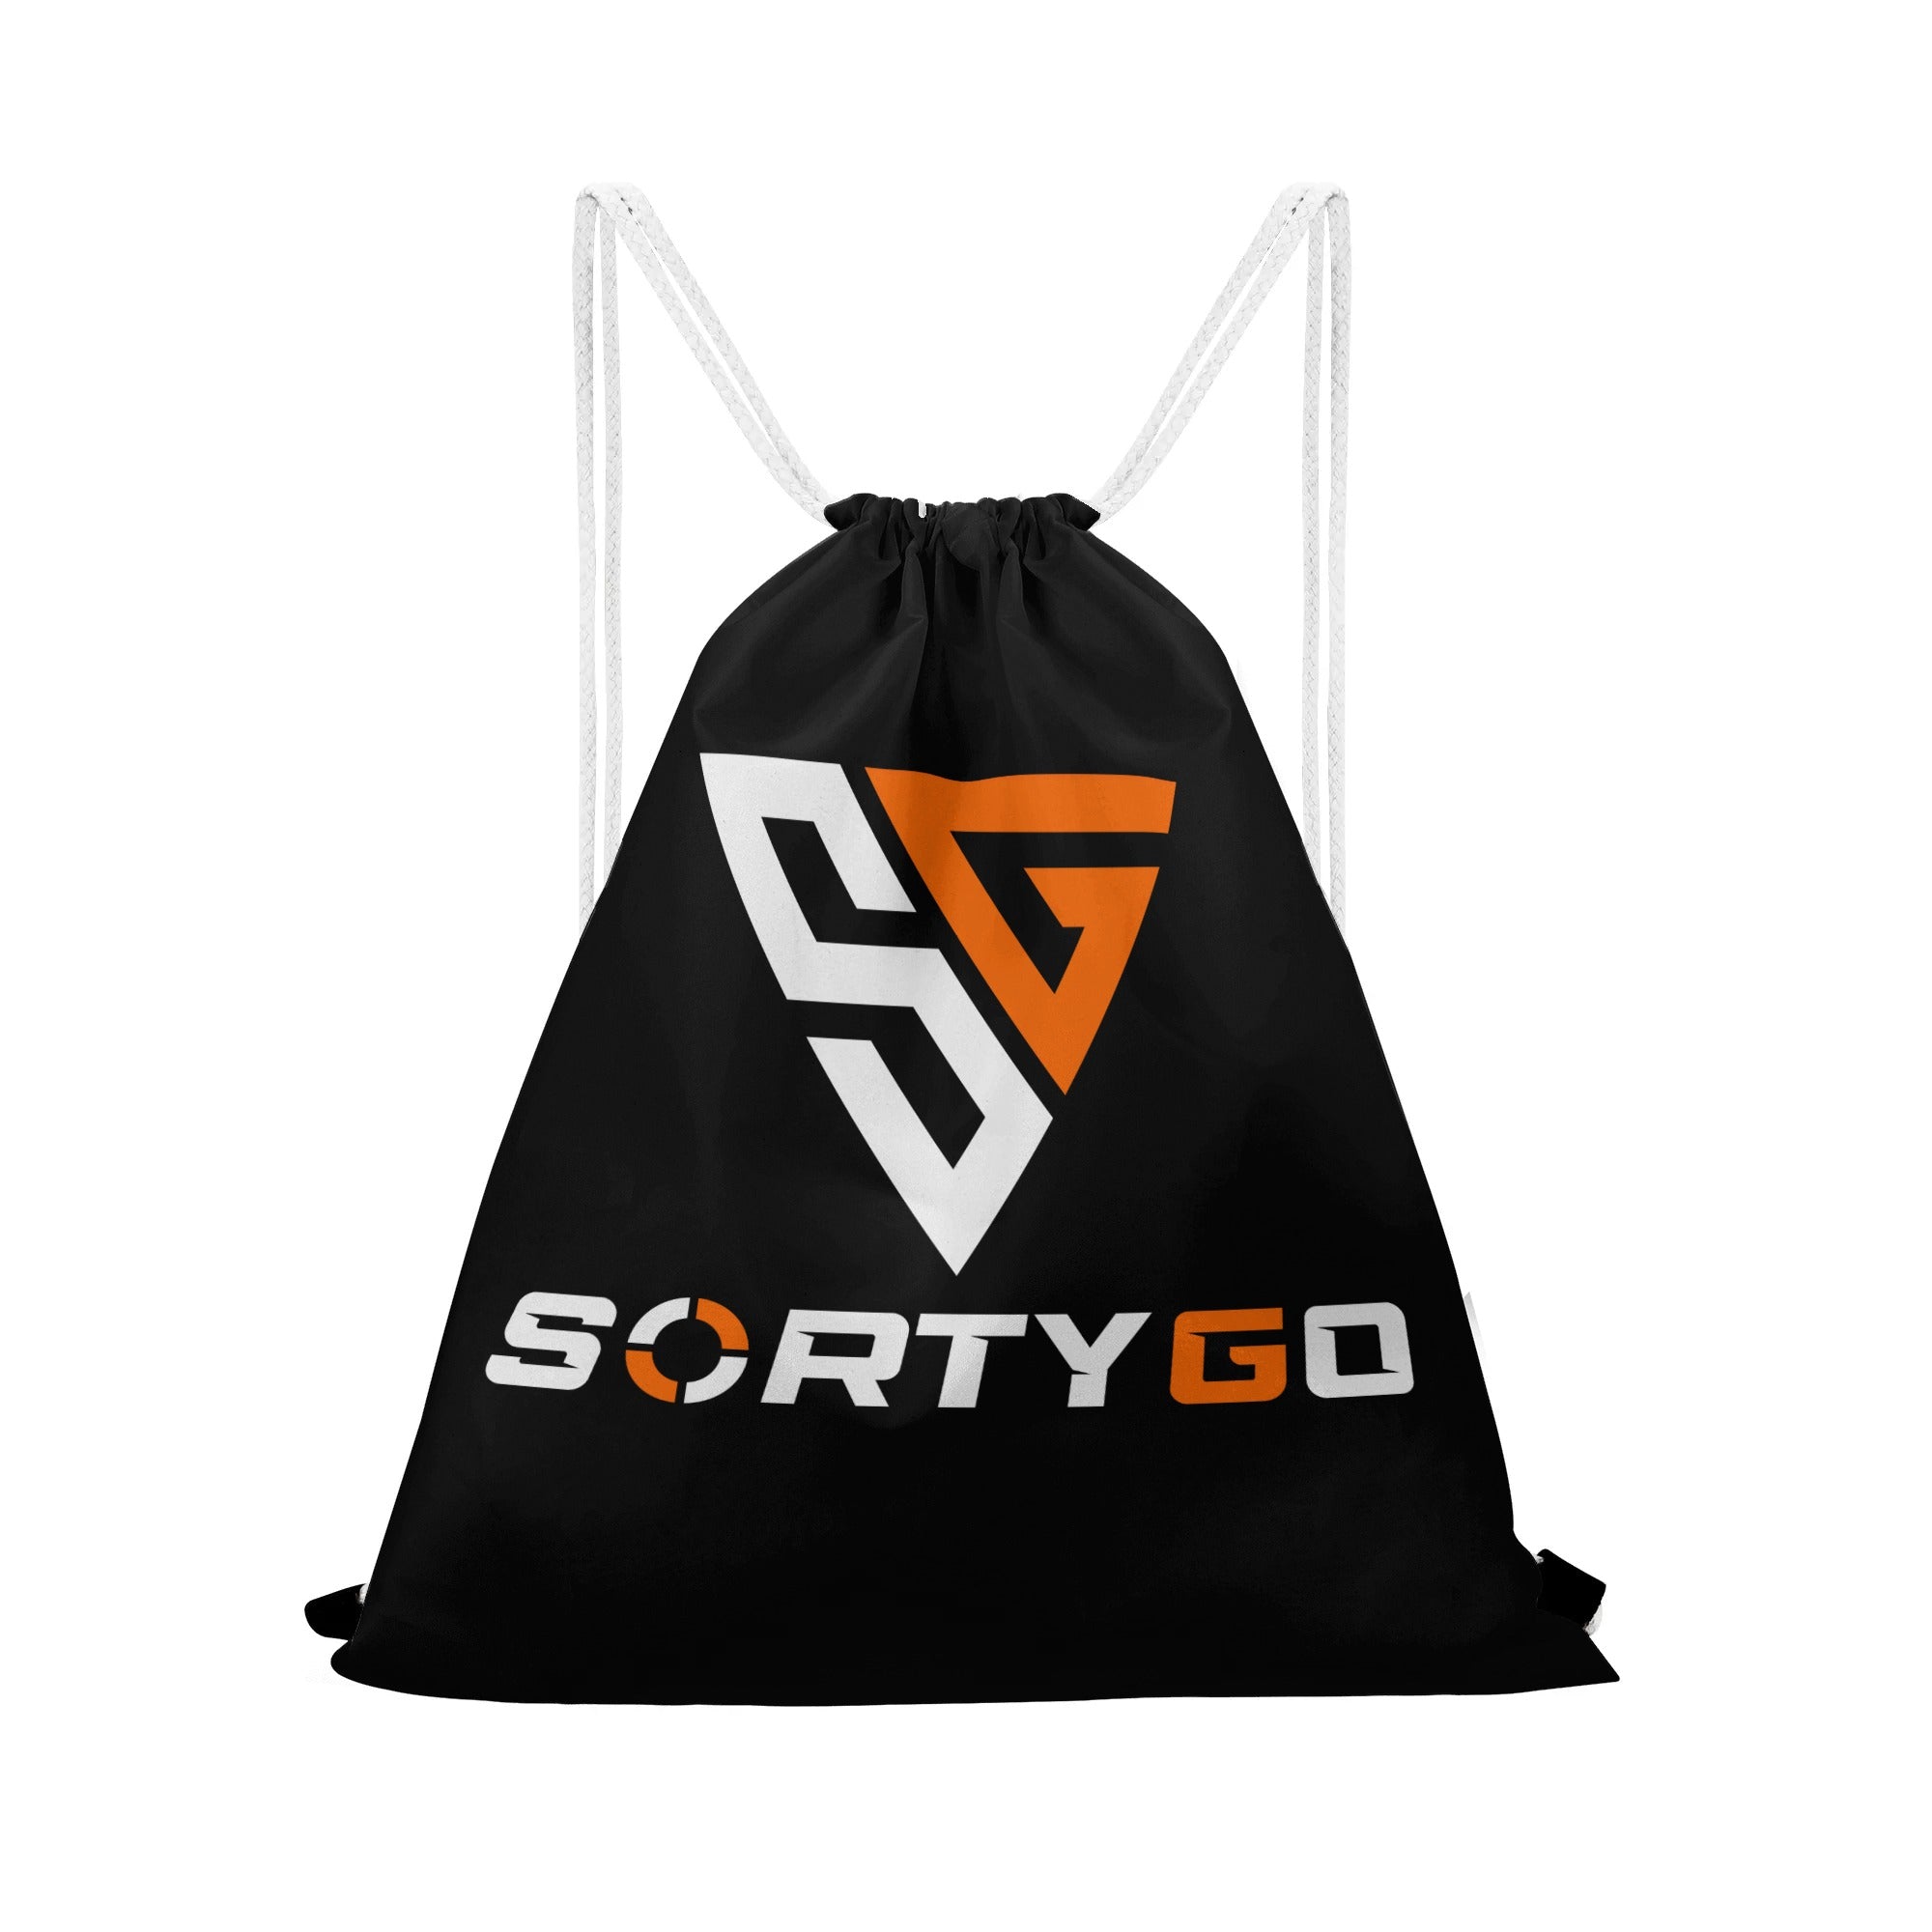 SORTYGO - Mystique Drawstring Bag in